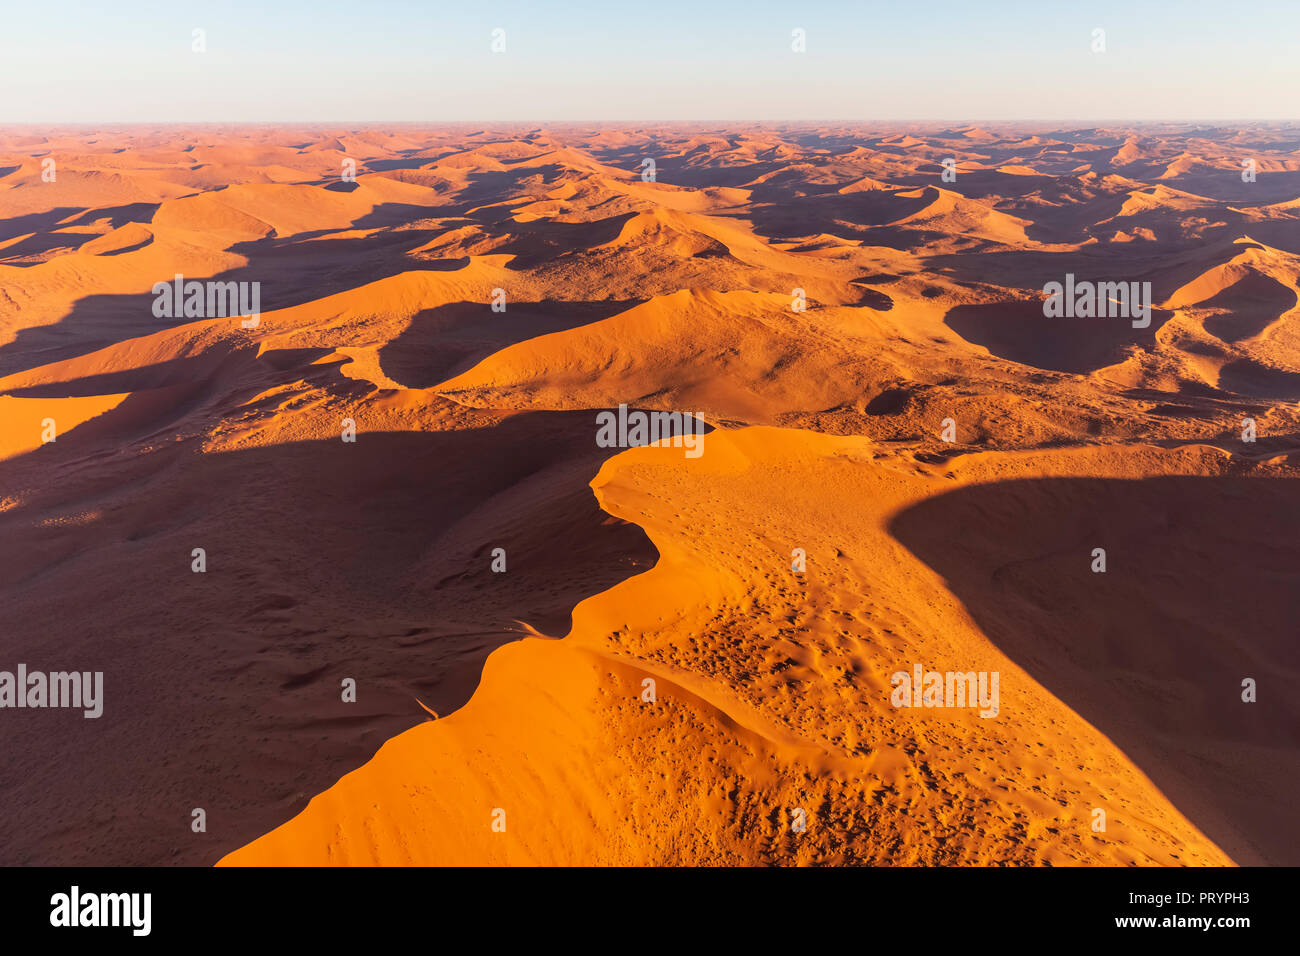 Afrika, Namibia, die Wüste Namib, Namib-Naukluft-Nationalpark, Luftaufnahme von Dünen der Wüste Stockfoto